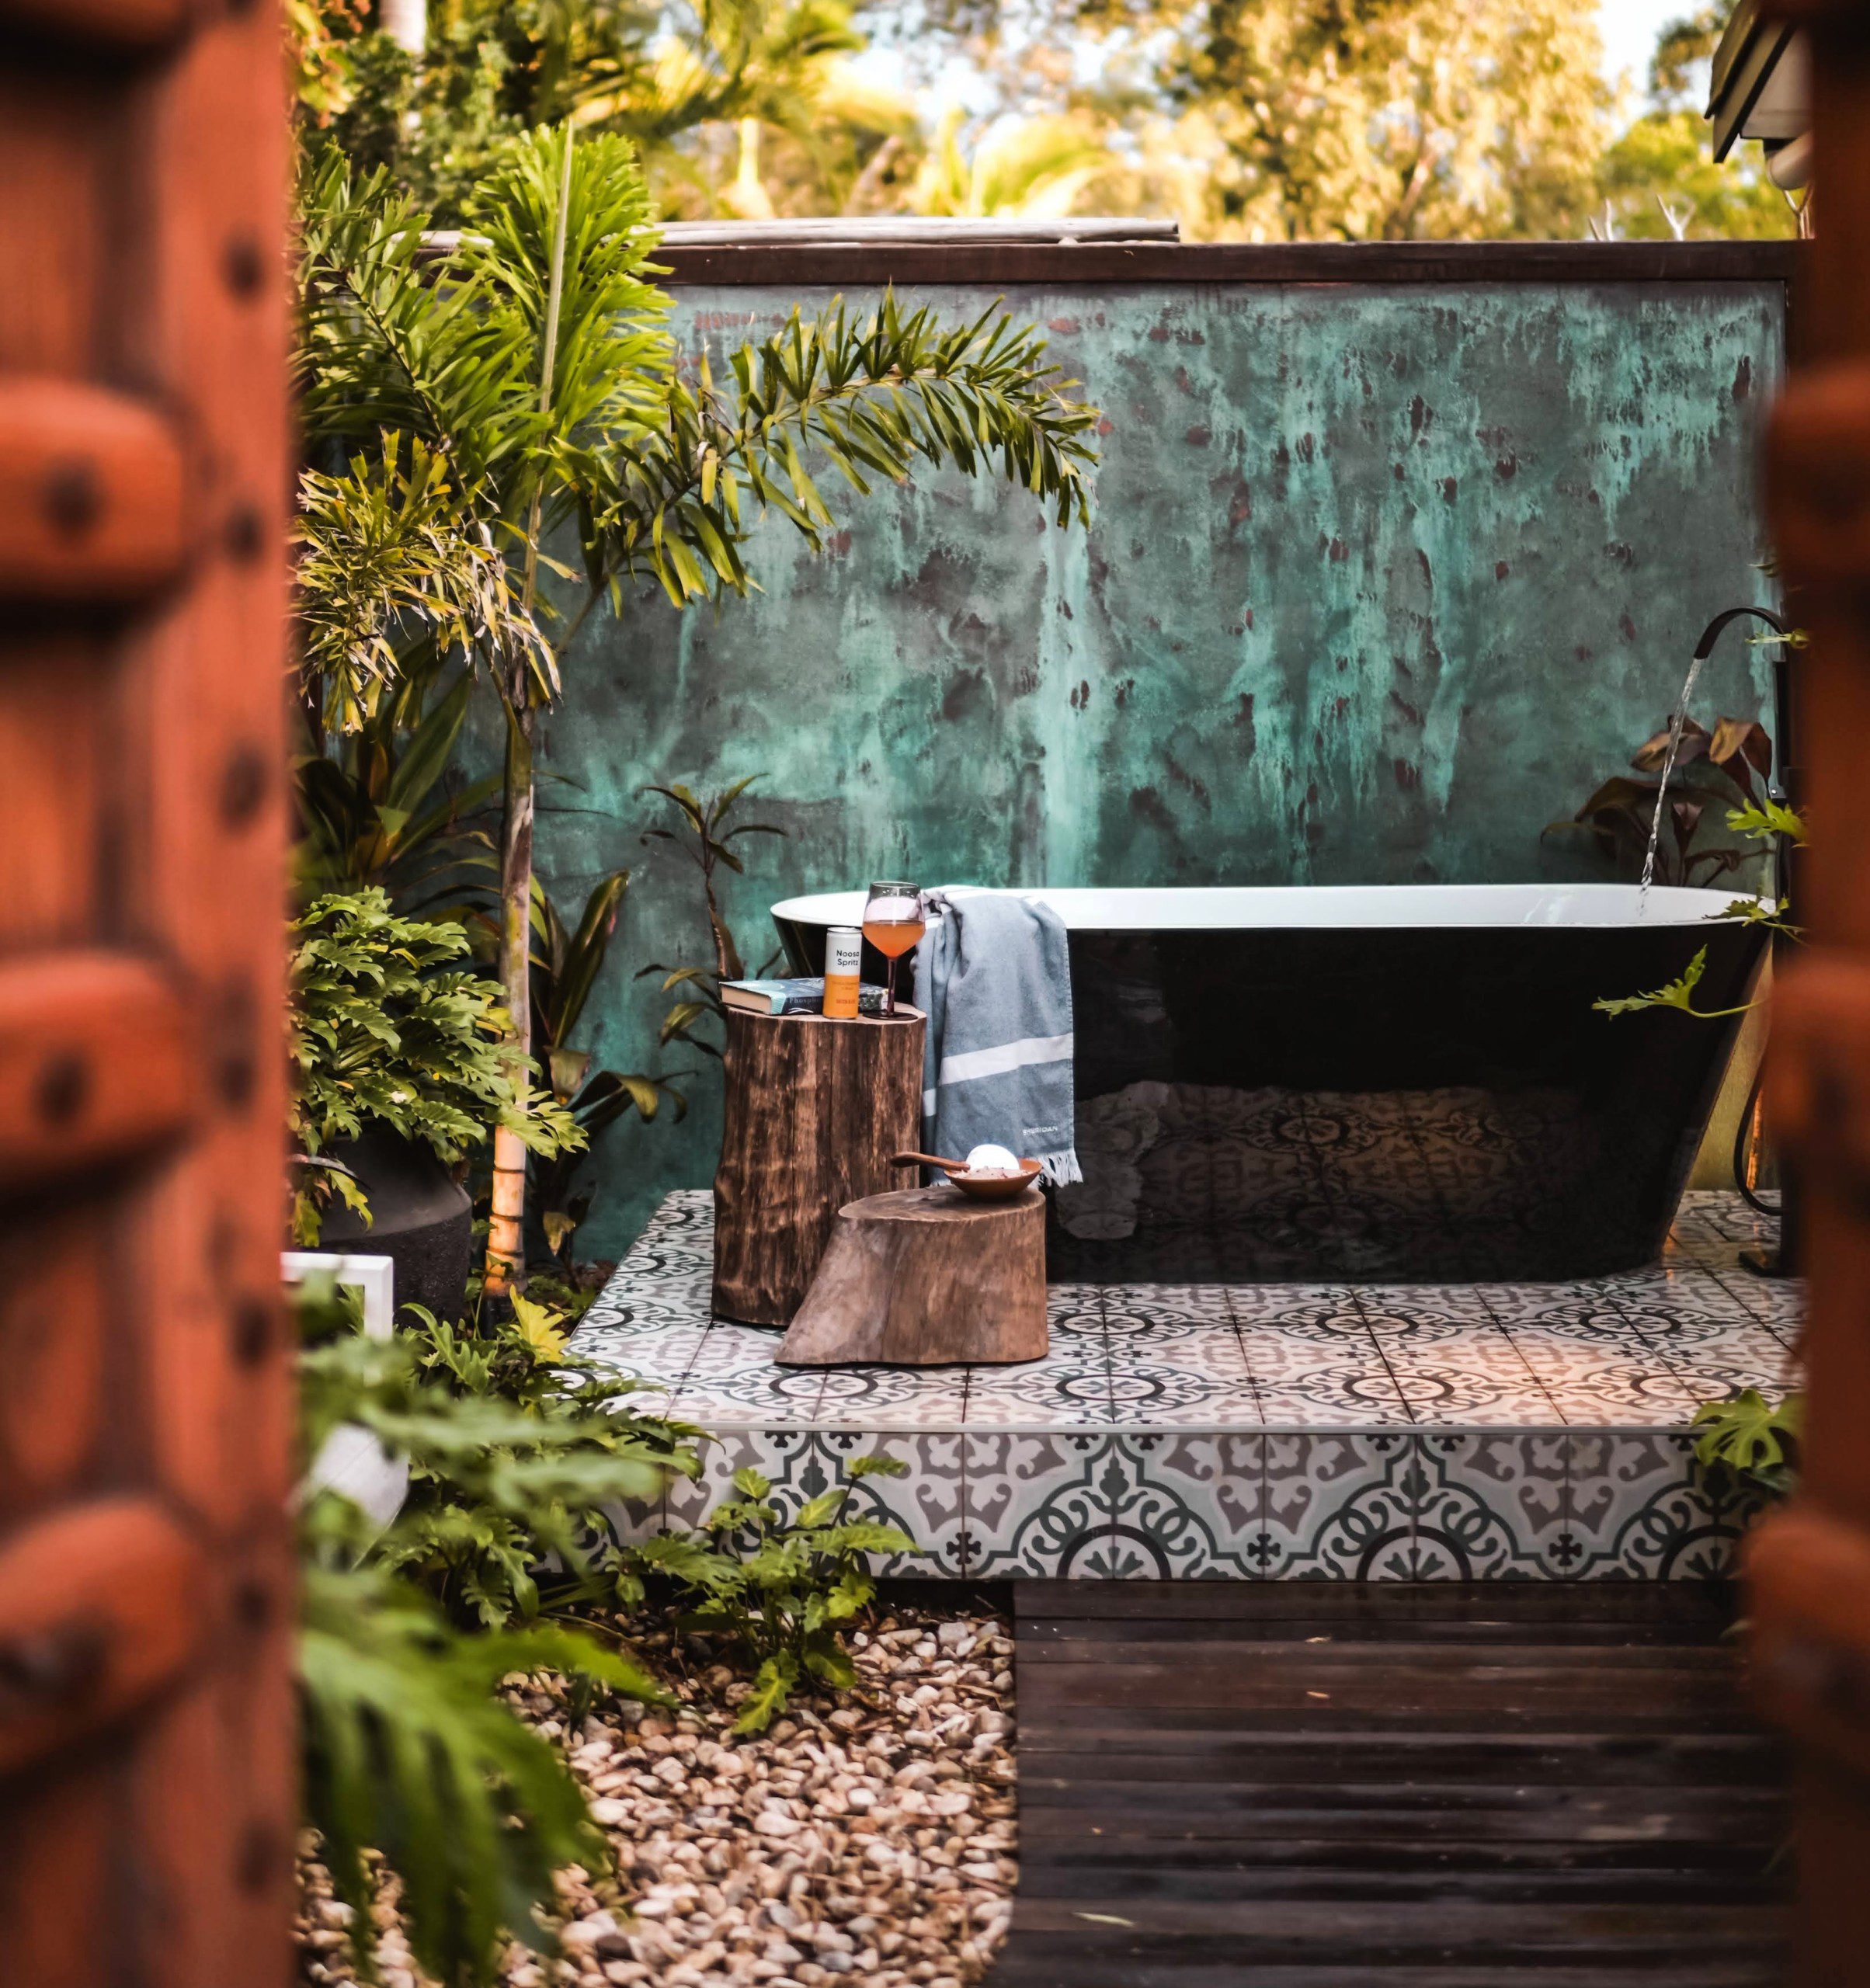 Outdoor bath, sparkling pool designer home